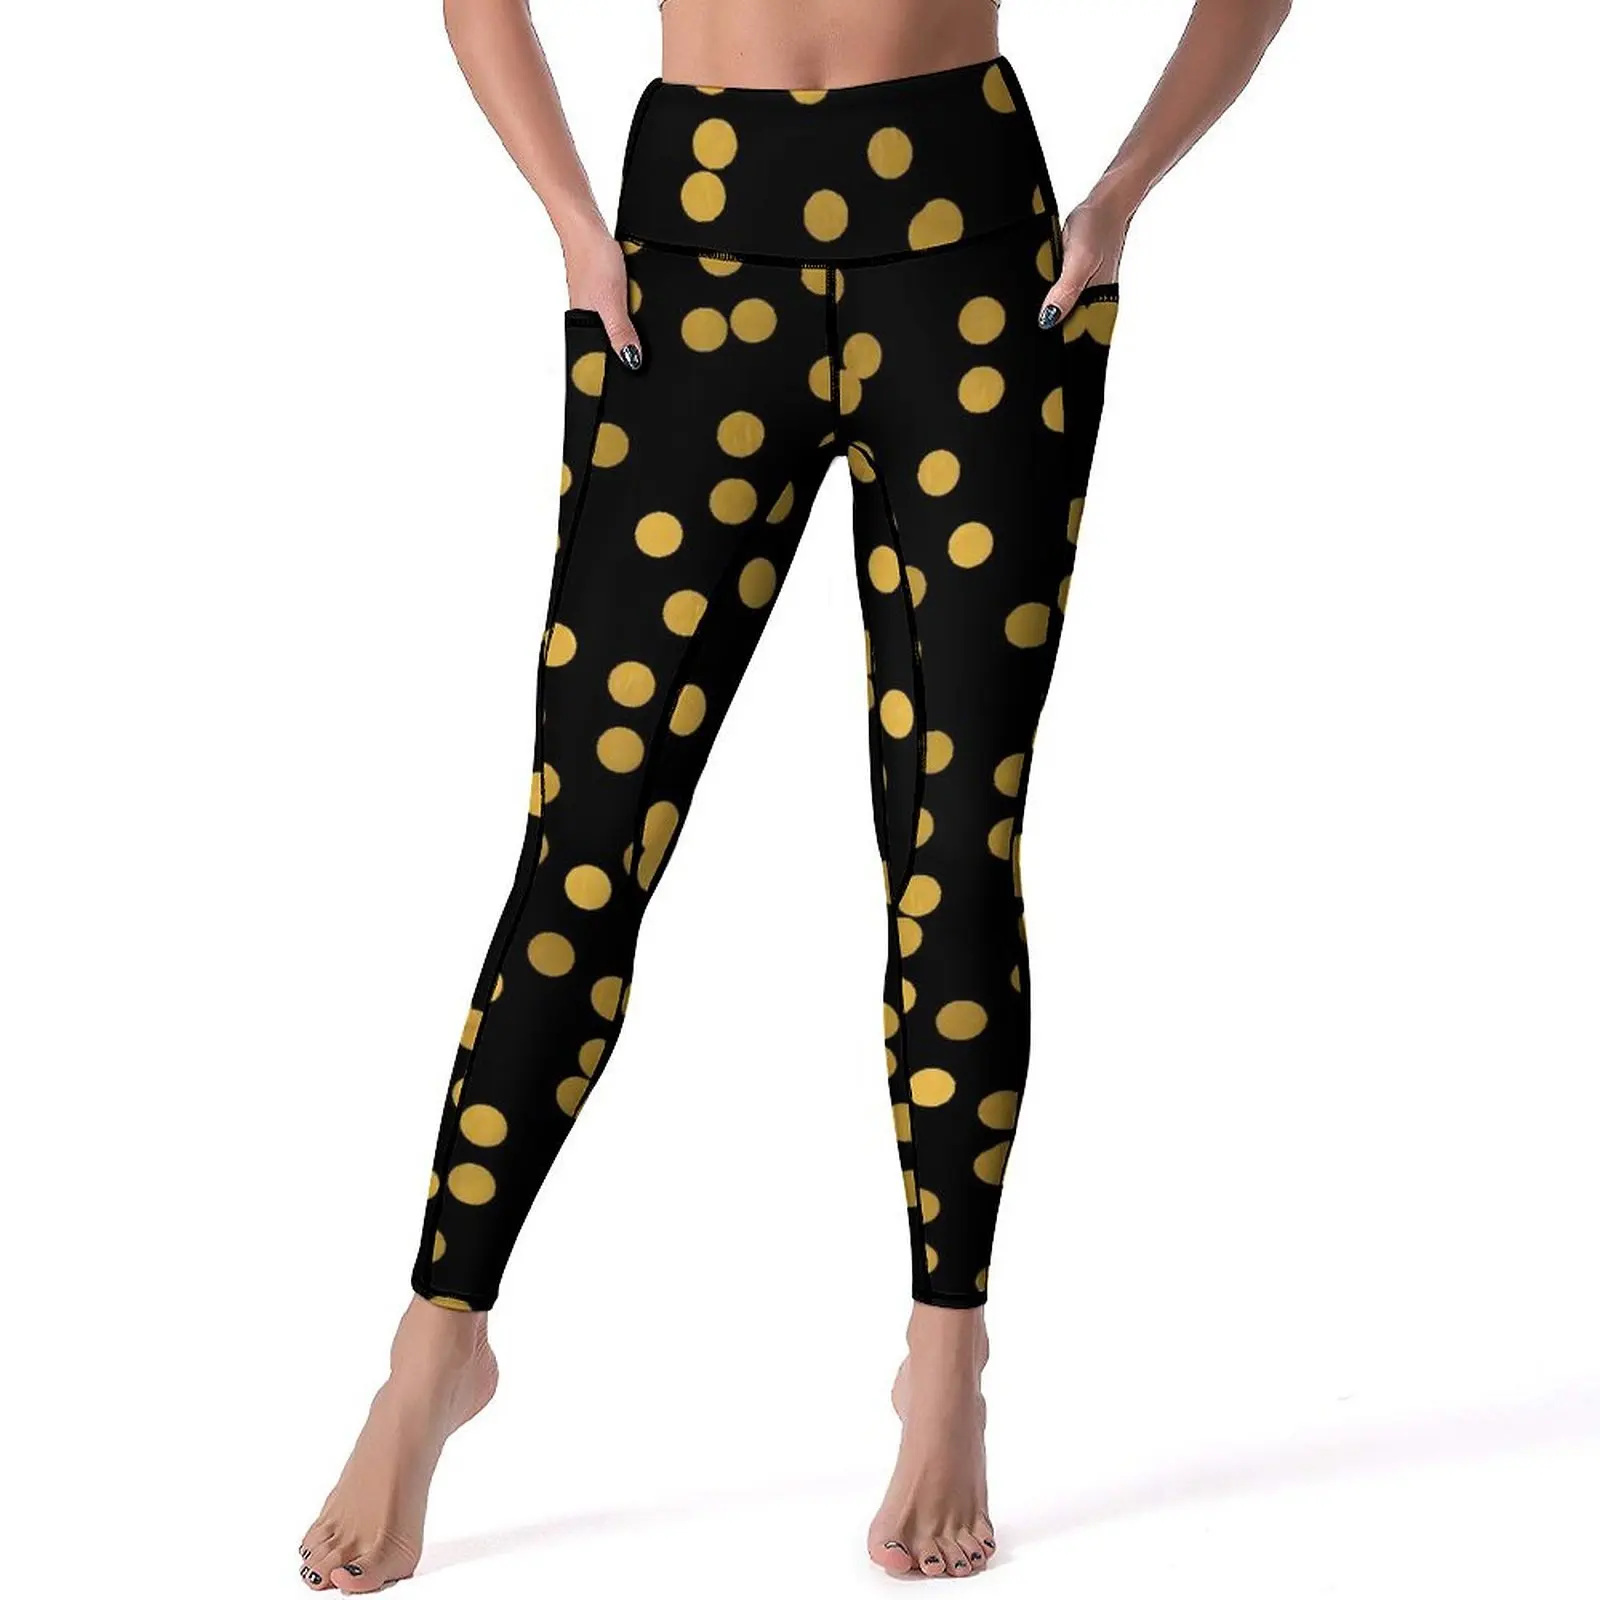 

Gold Dot Leggings Retro Polka Dots High Waist Yoga Pants Casual Quick-Dry Yoga Legging Female Print Fitness Running Sport Pants